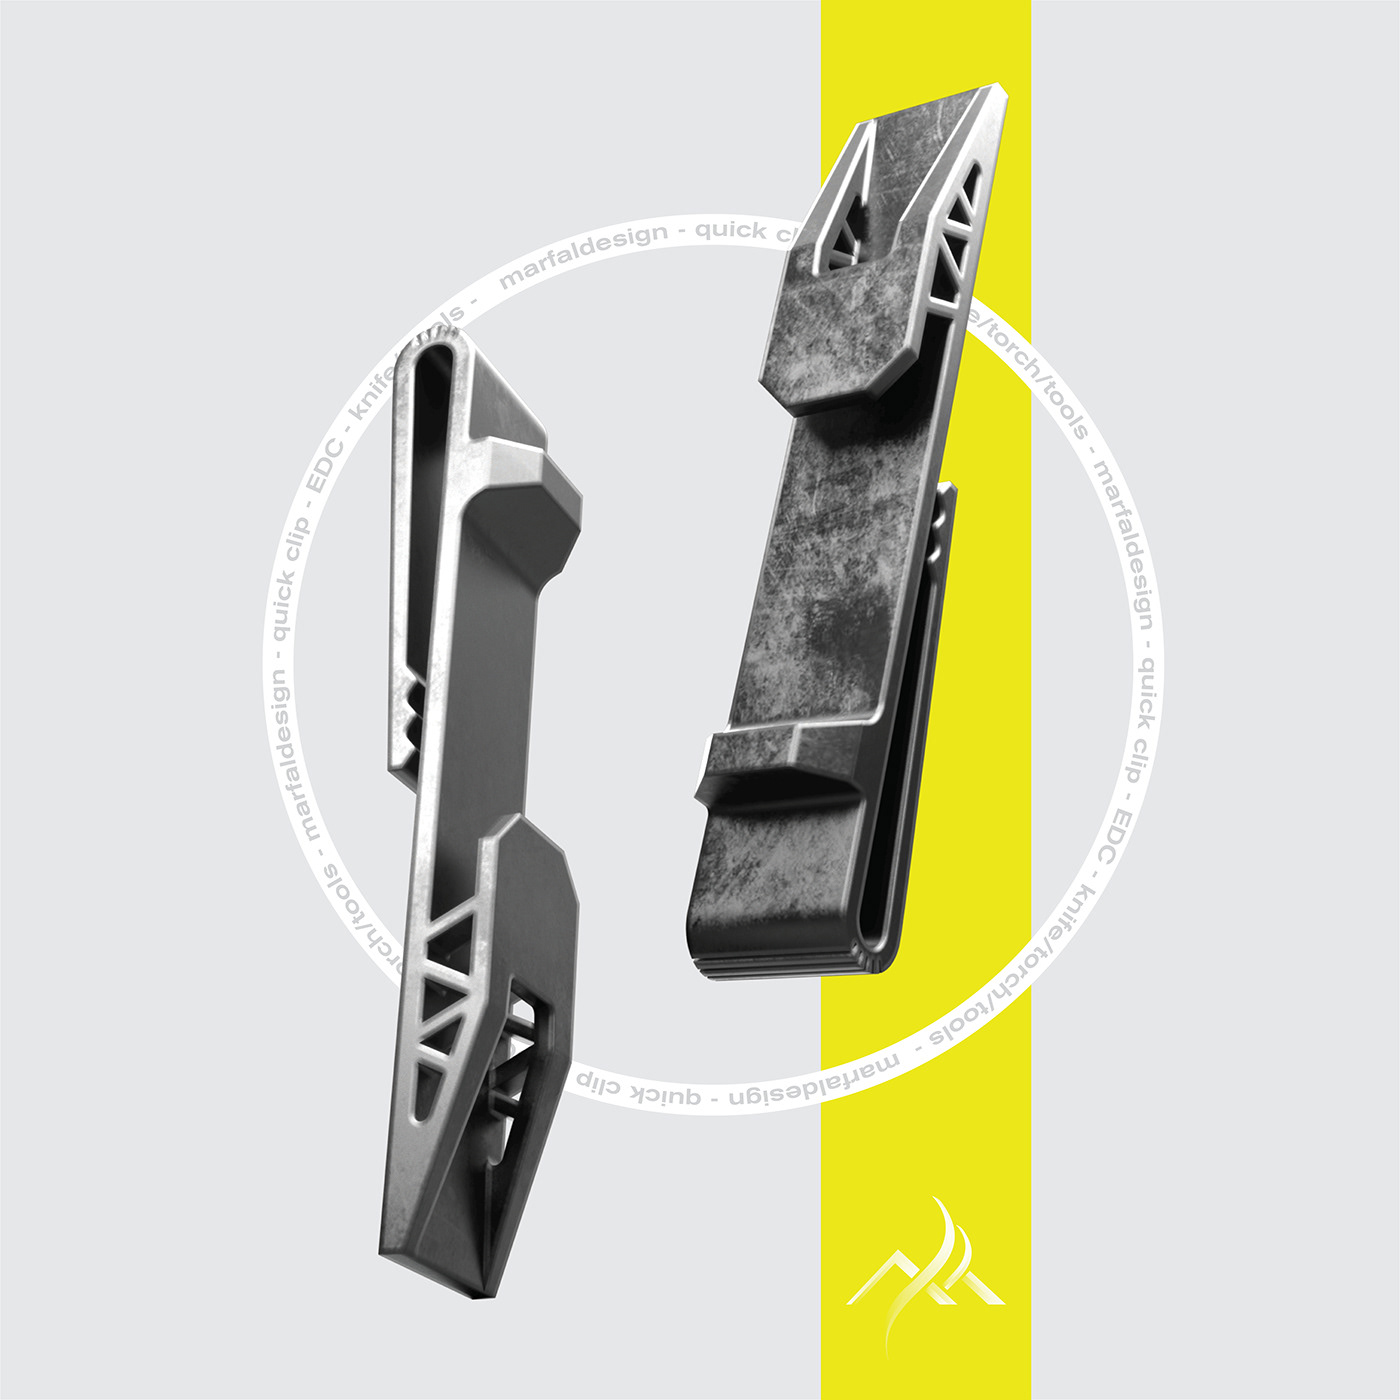 carabiner clip edc holder Holster knife Military Render tactical tool